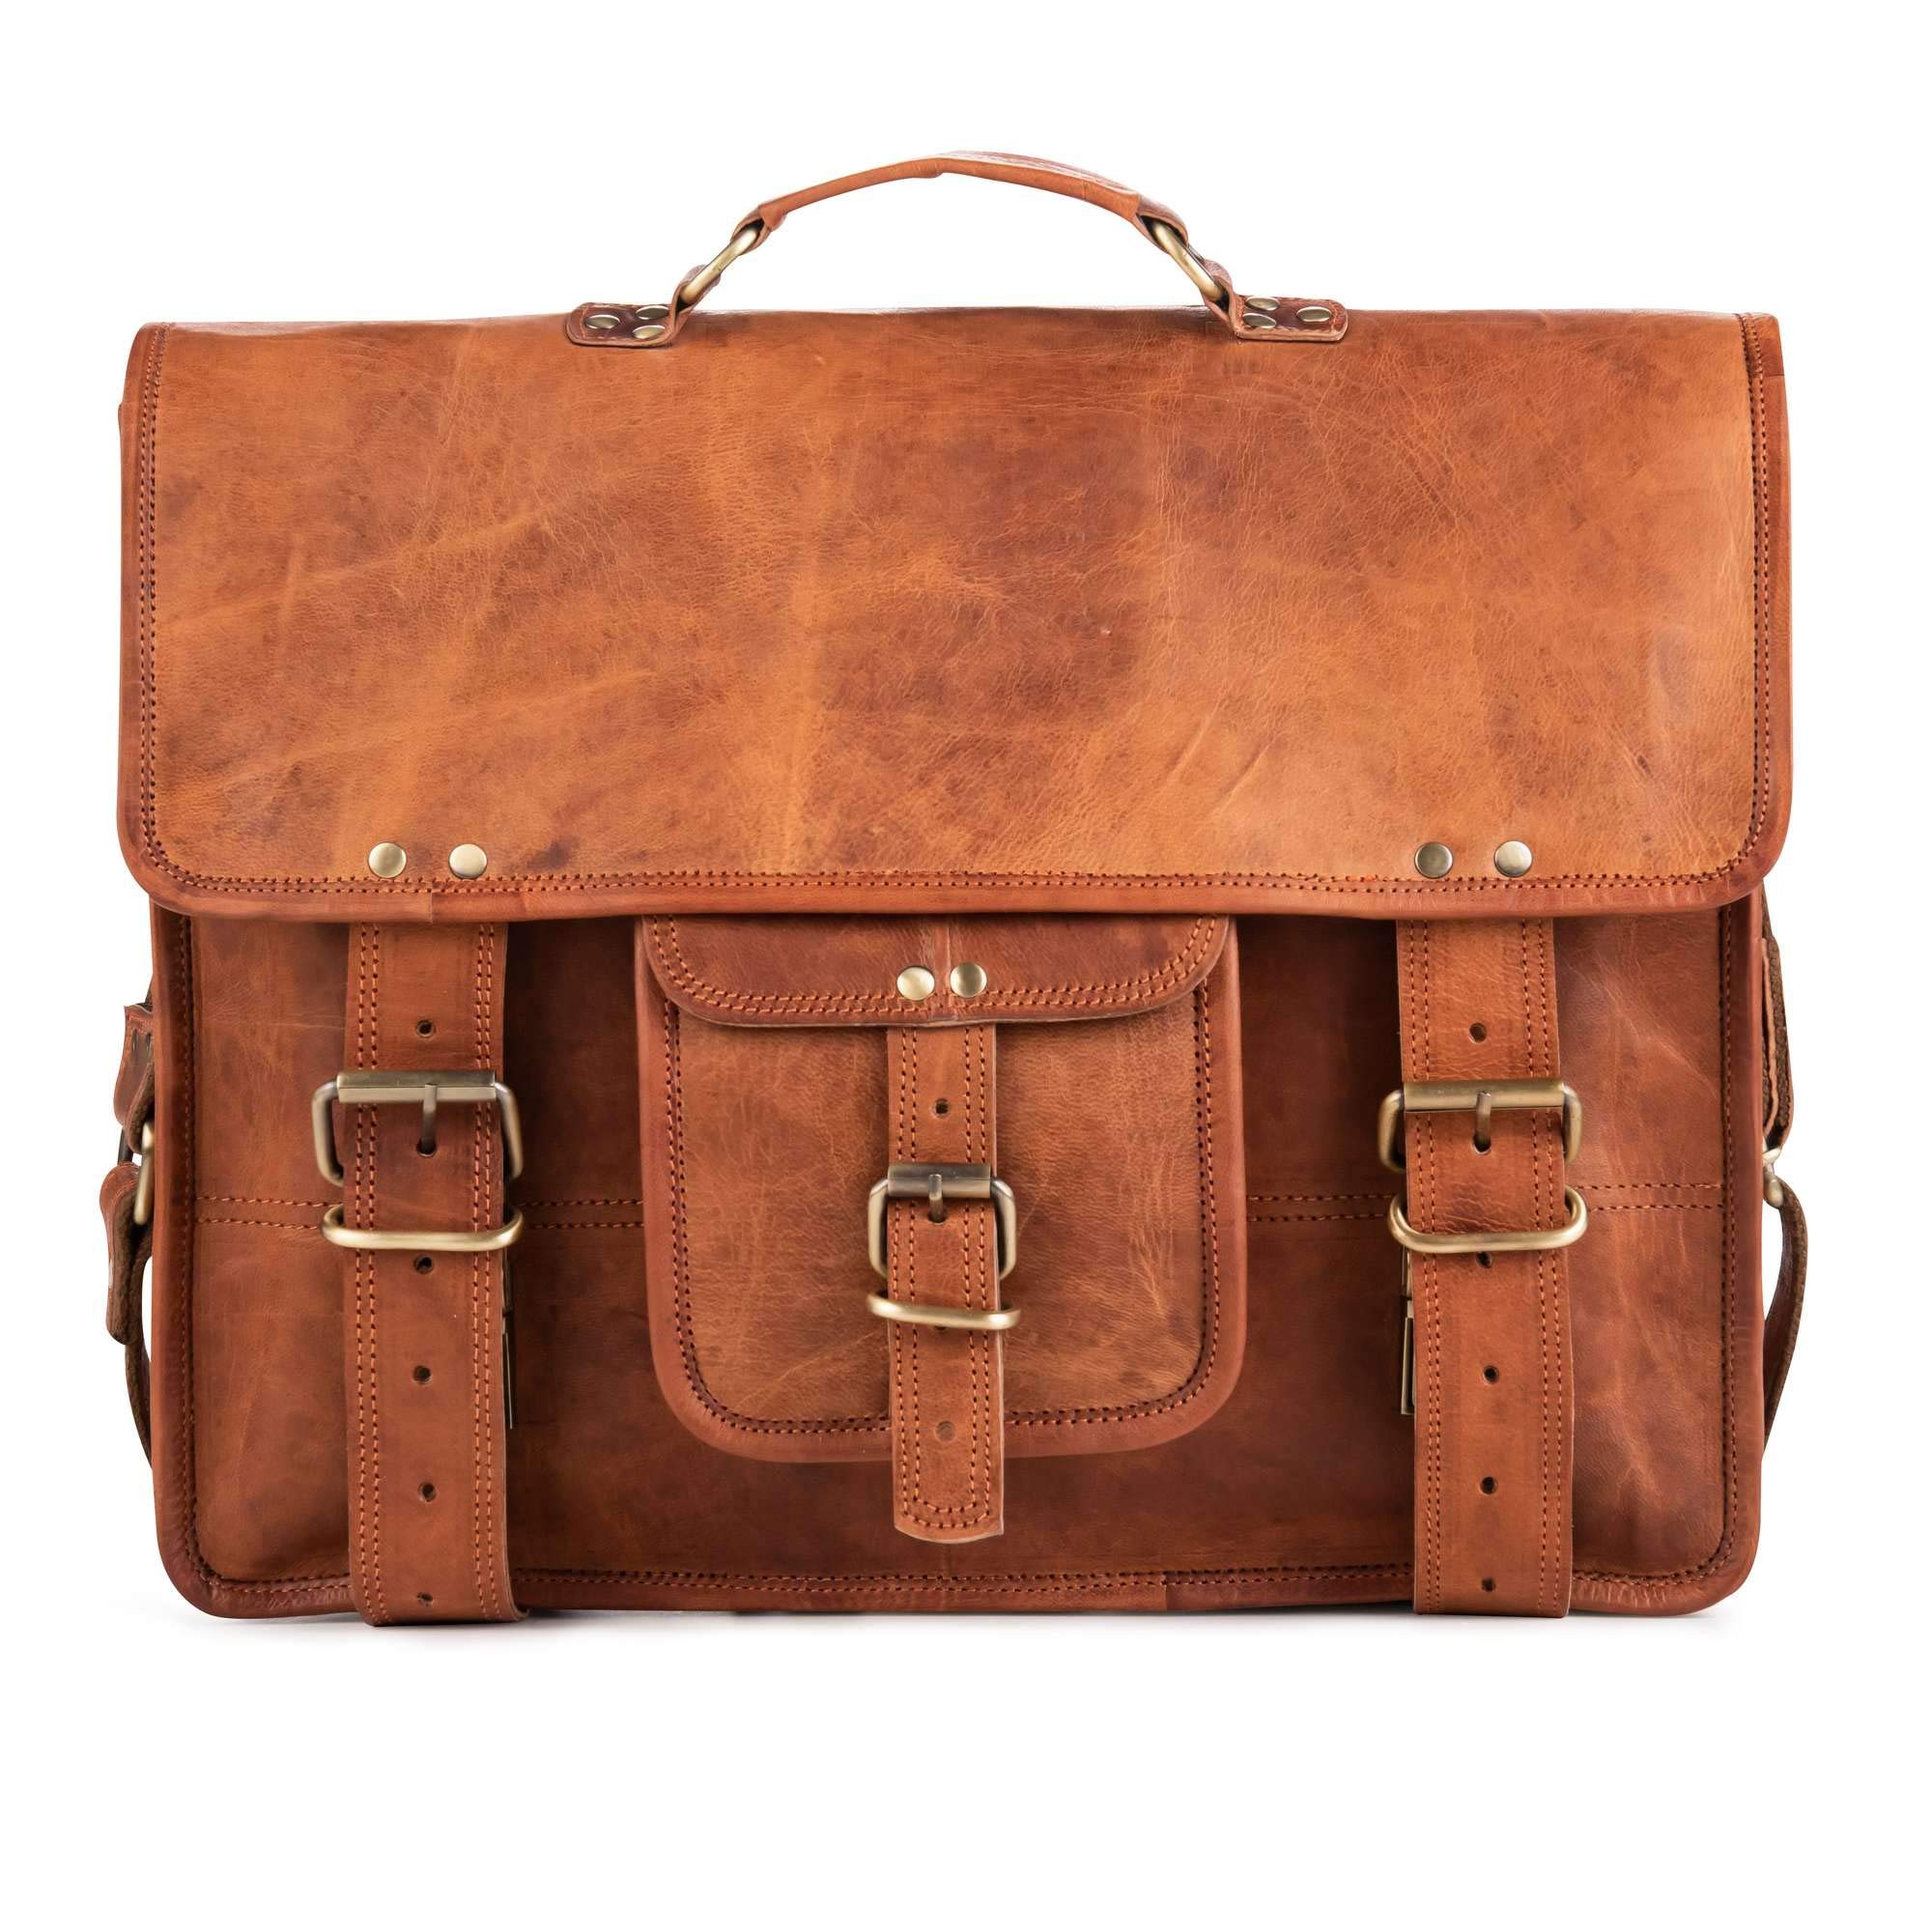 BERLINER BAGS Vintage Leather Messenger Bag Berlin, Briefcase for Men and Women - Brown (Cognac XL)